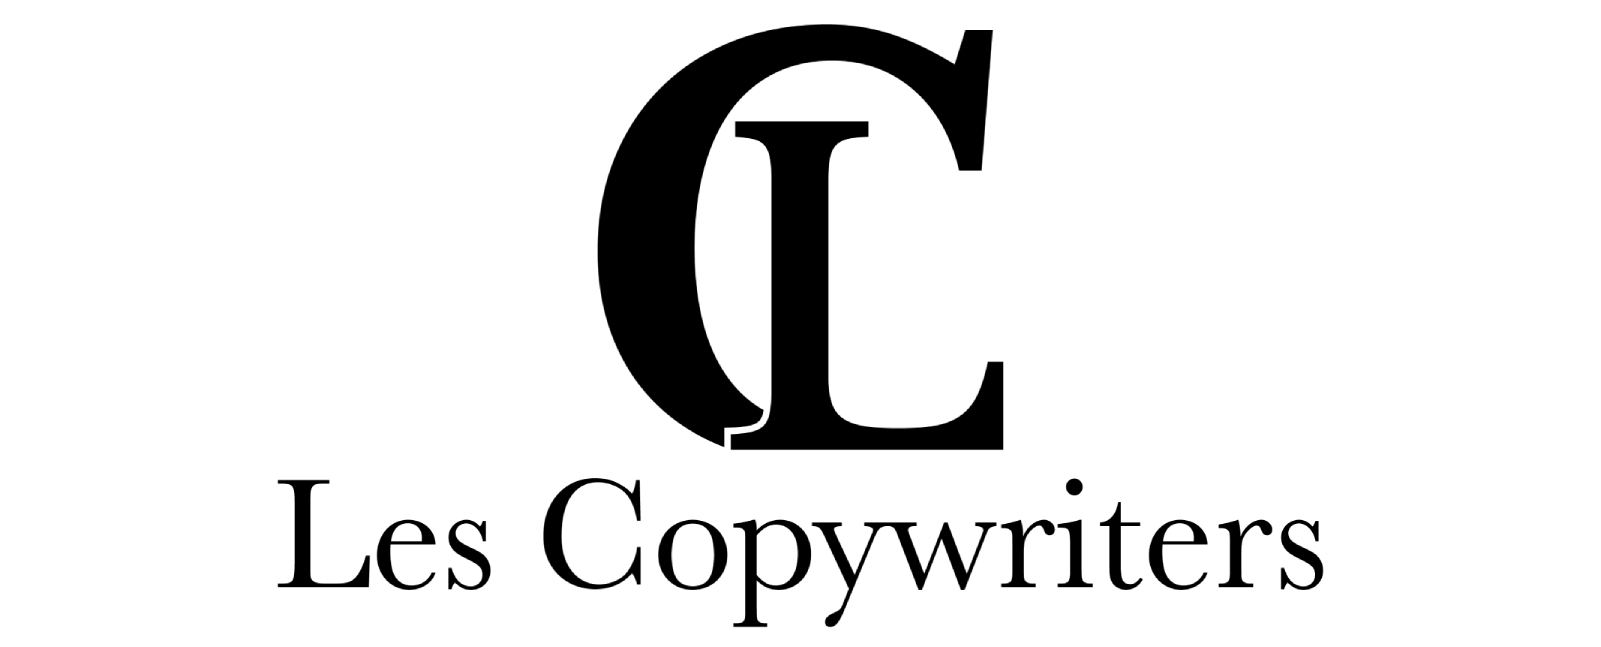 copywriting